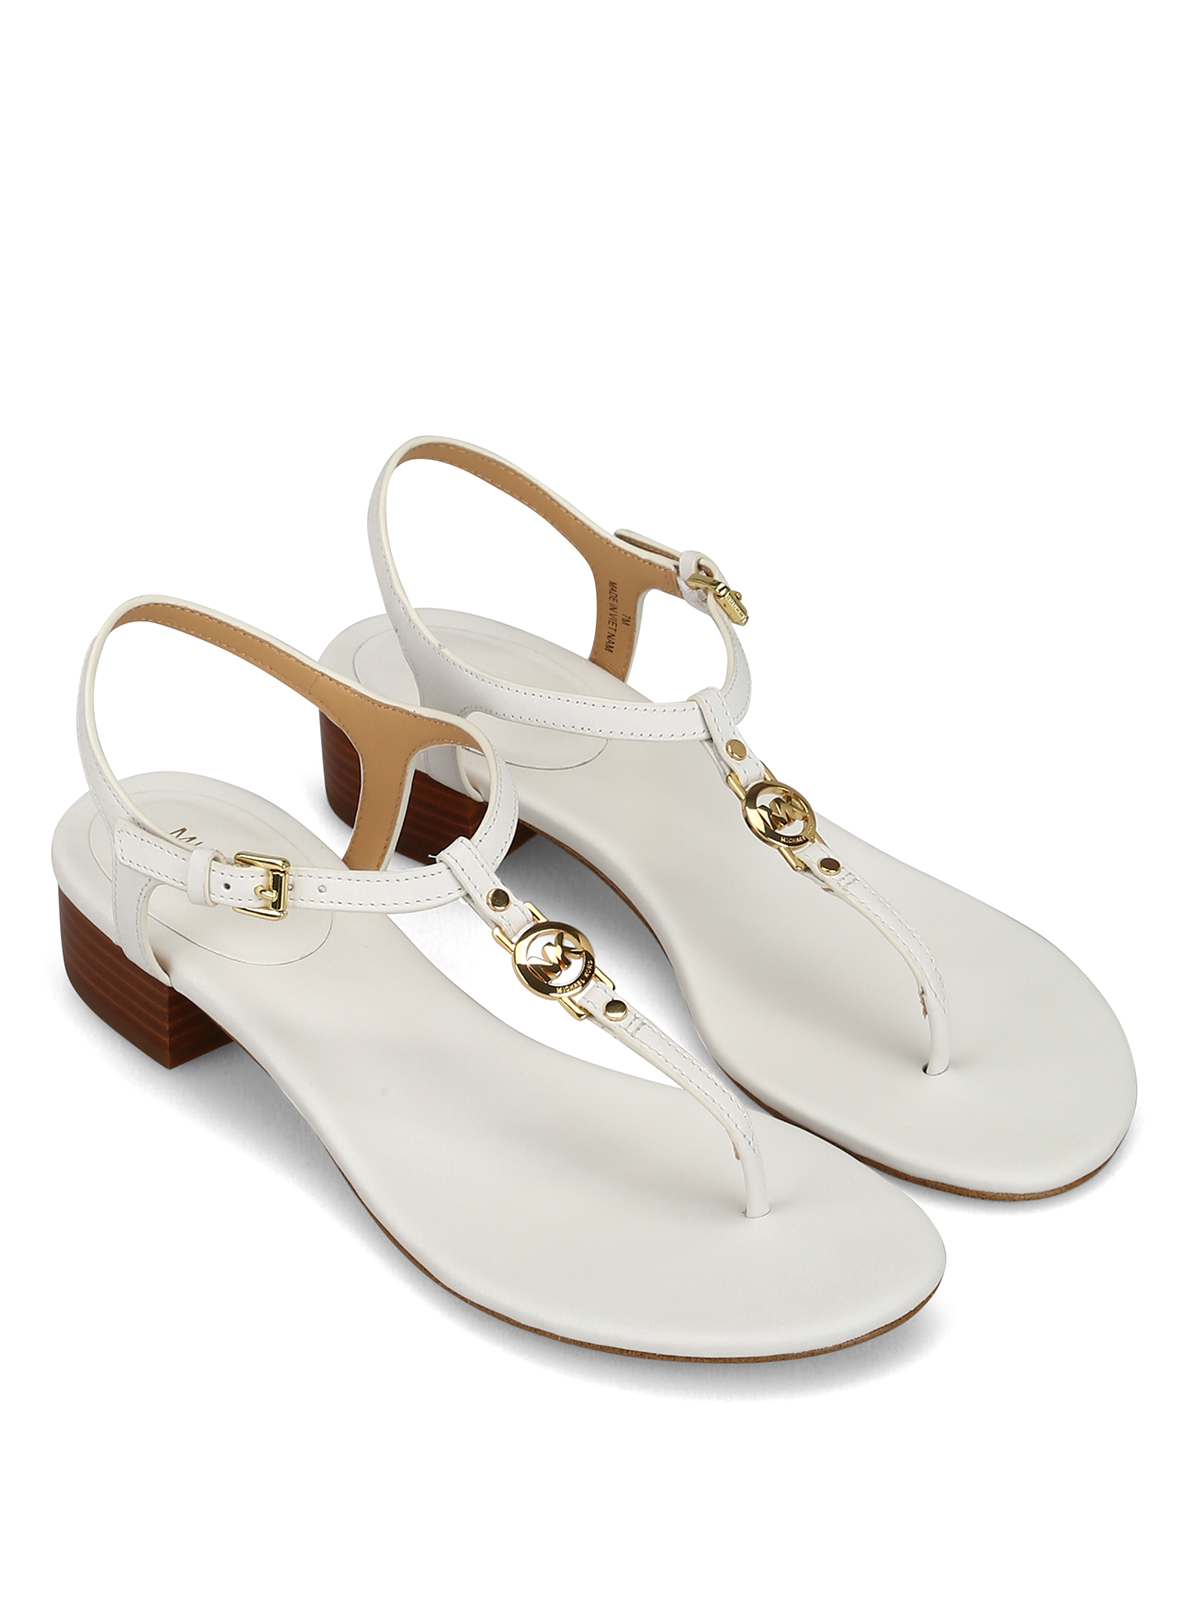 Sandals Michael Kors - Cayla Mid white leather sandals - 40S8CYFS1L085